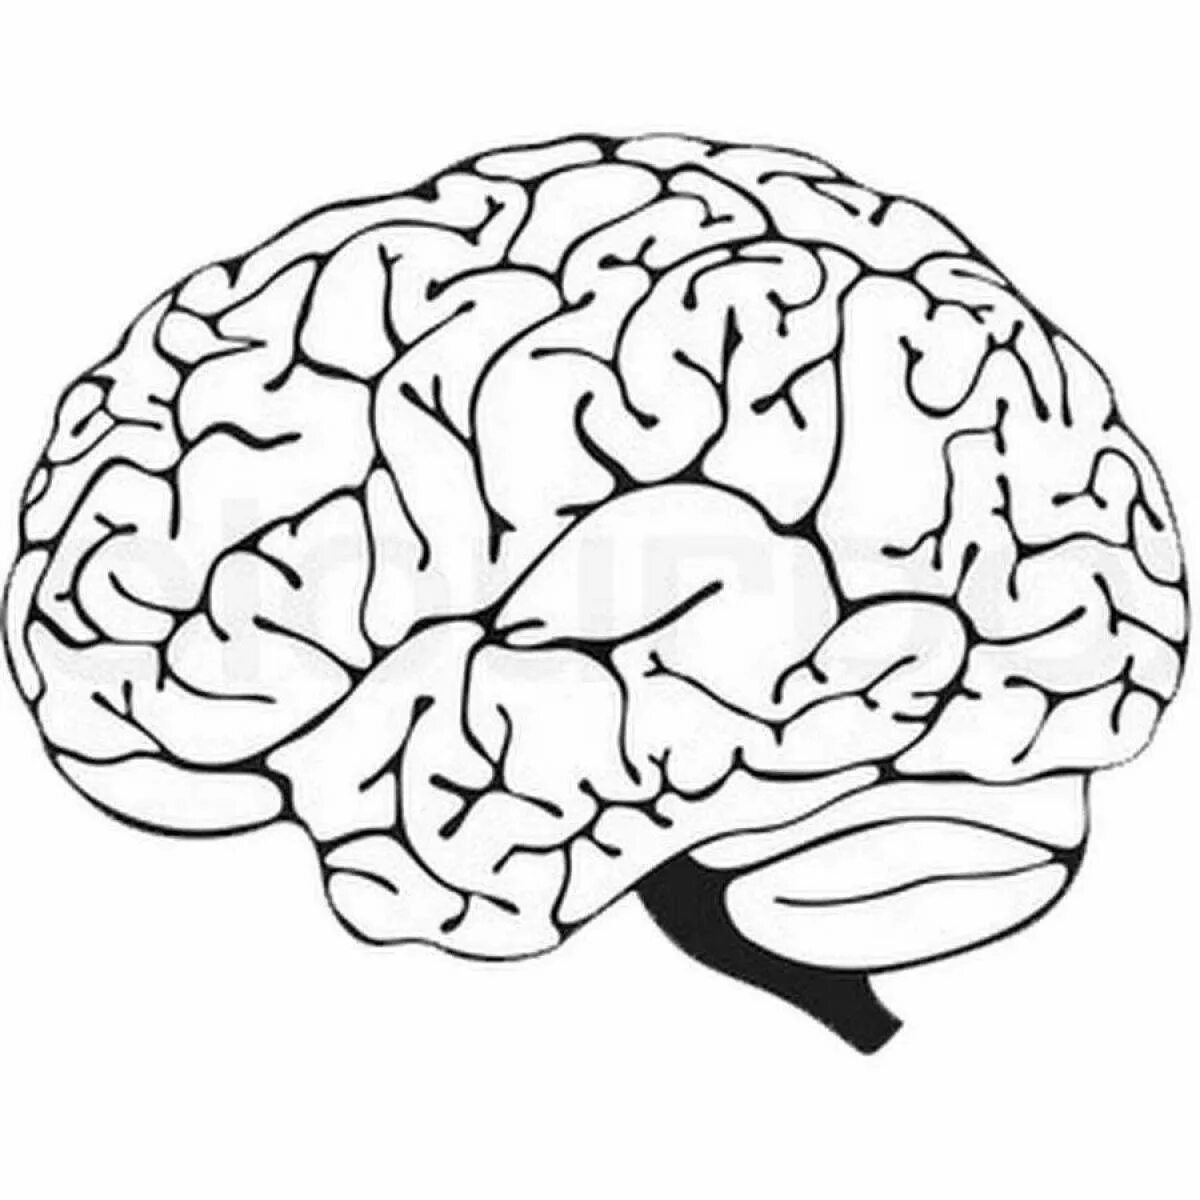 Мозг очертания. Мозг контур. Мозг черно белый. Мозг трафарет. Рисунок мозга легко